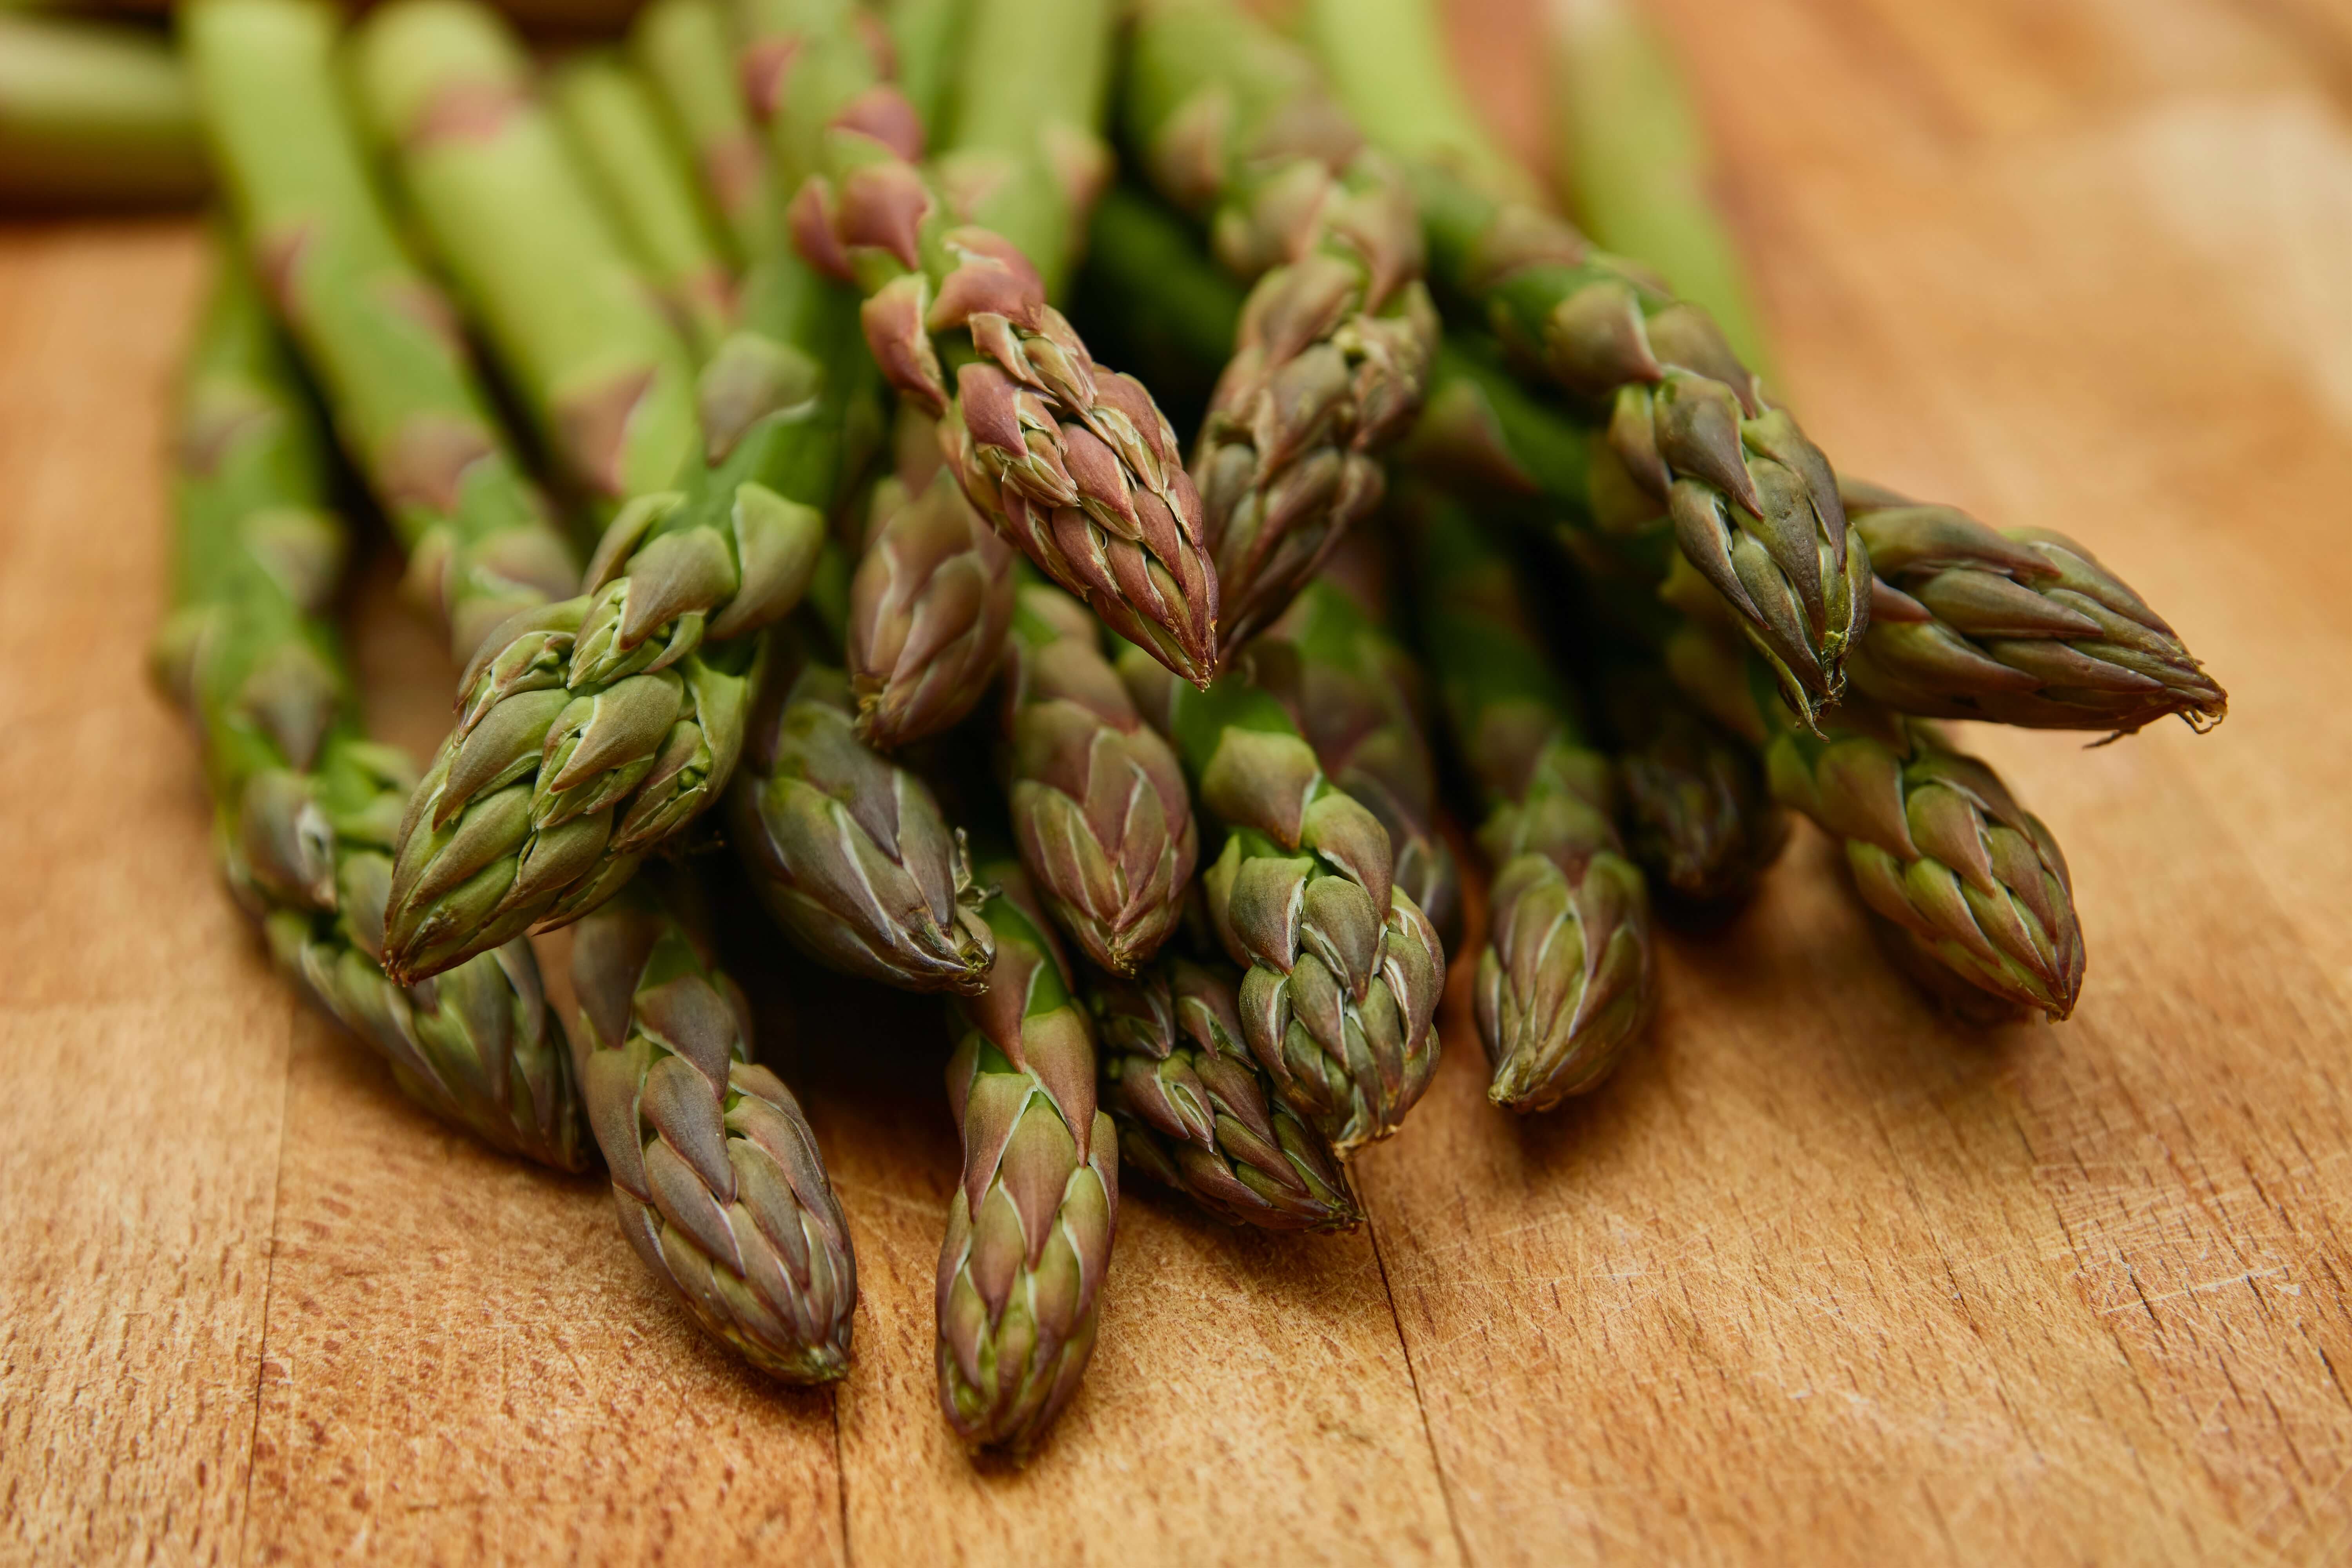 freeze asparagus